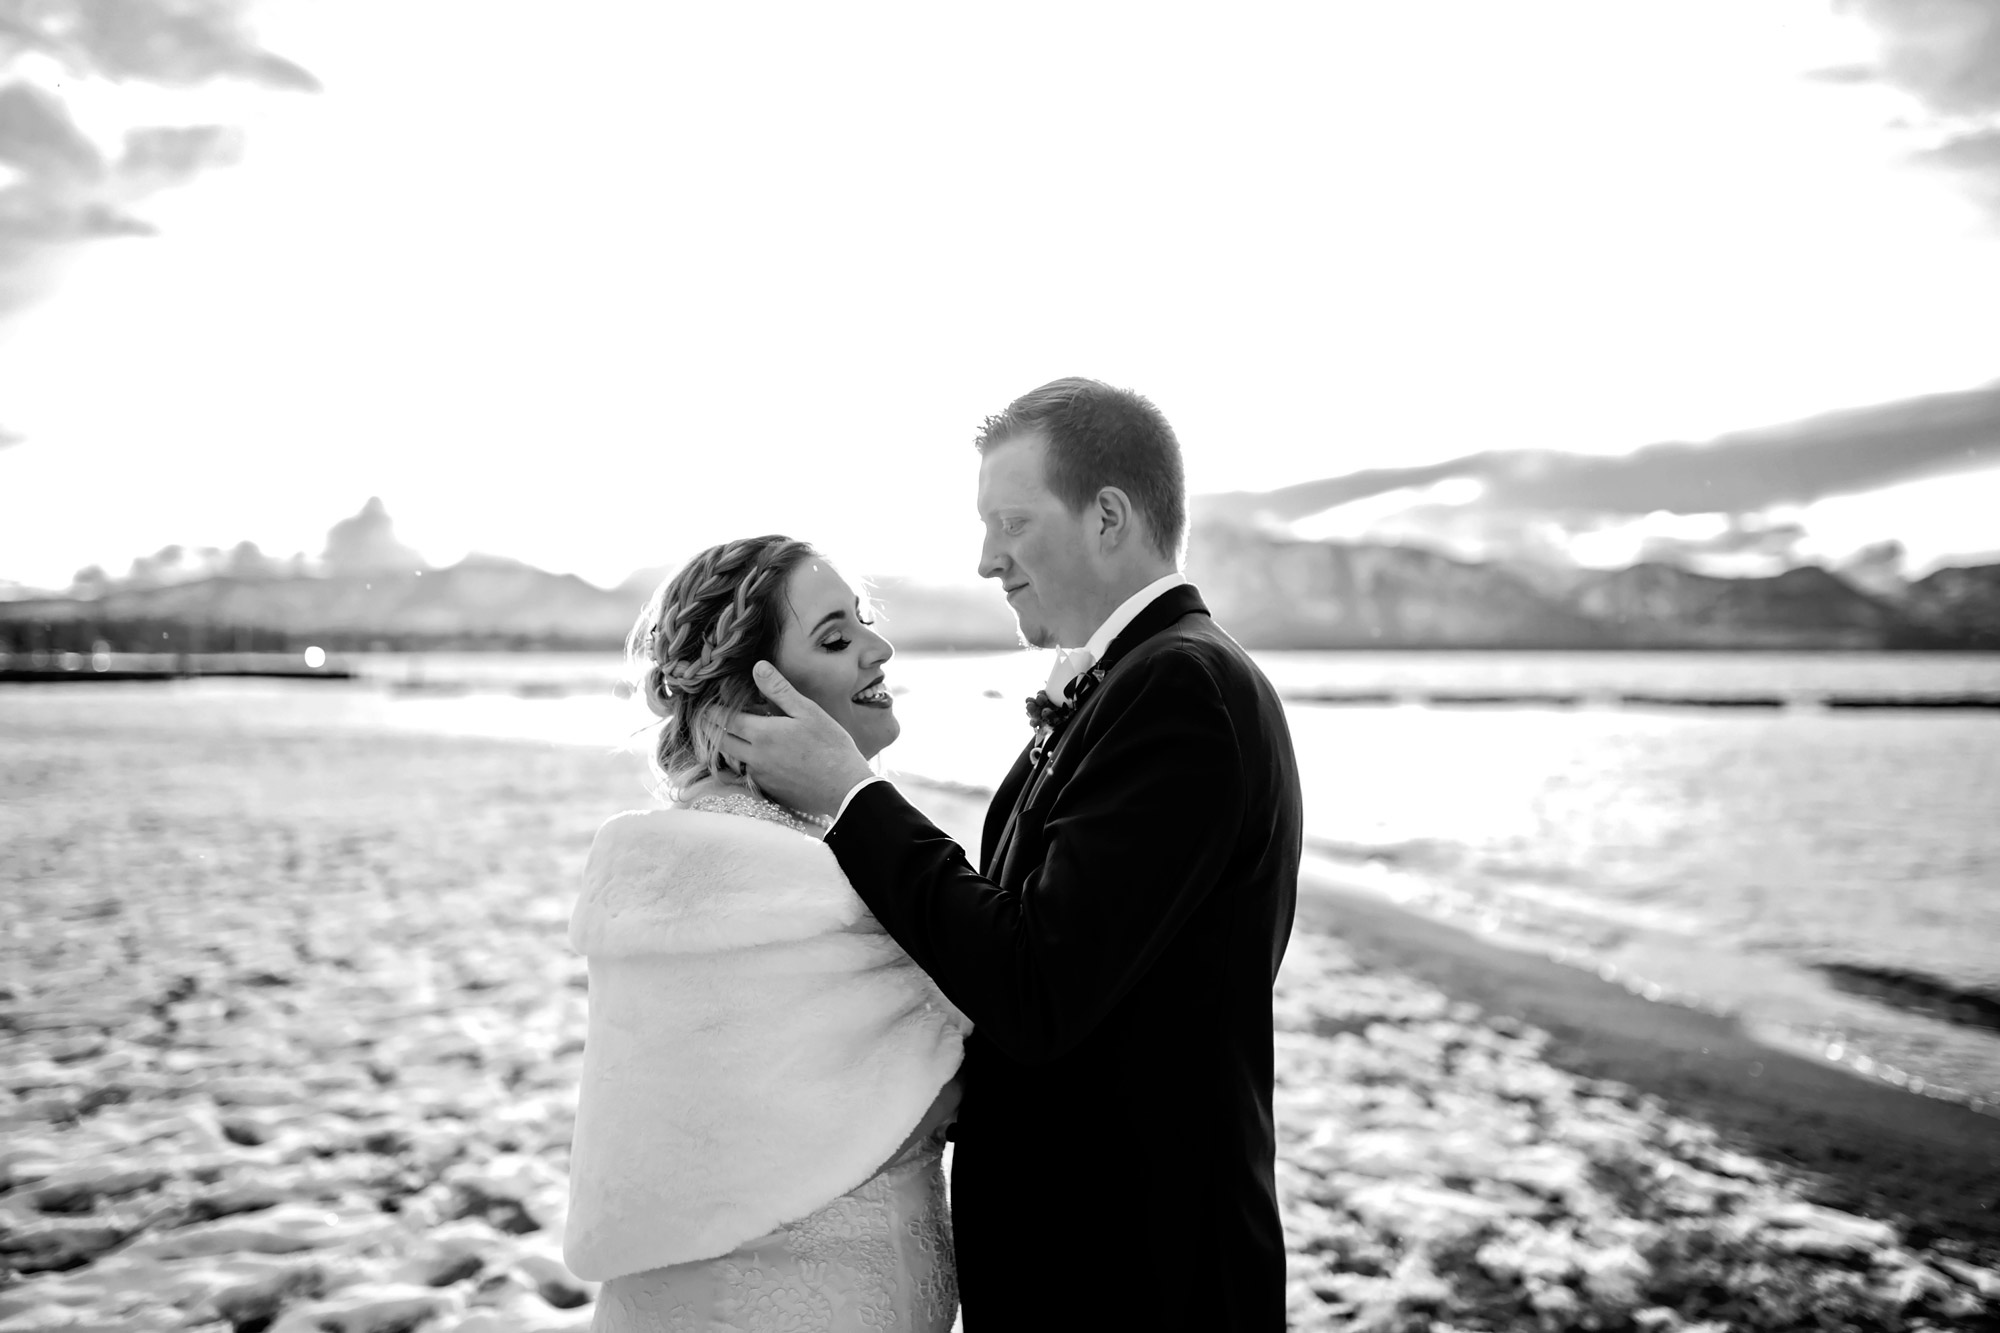 South Lake Tahoe wedding photographer